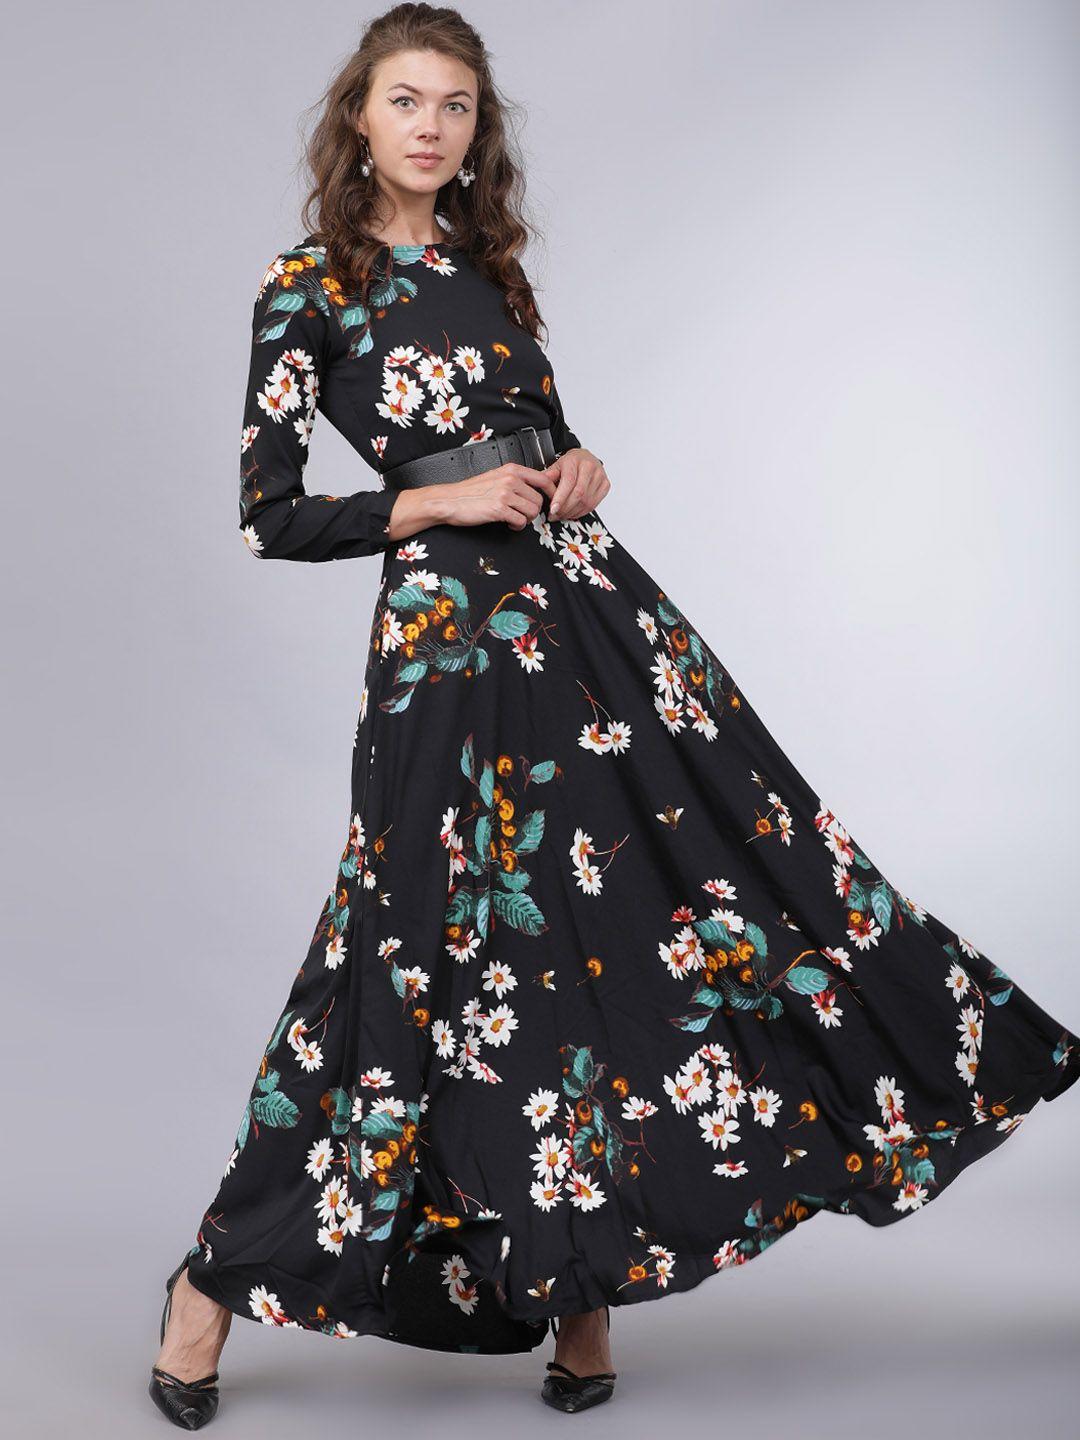 mumbai slang chic women black floral printed maxi dress